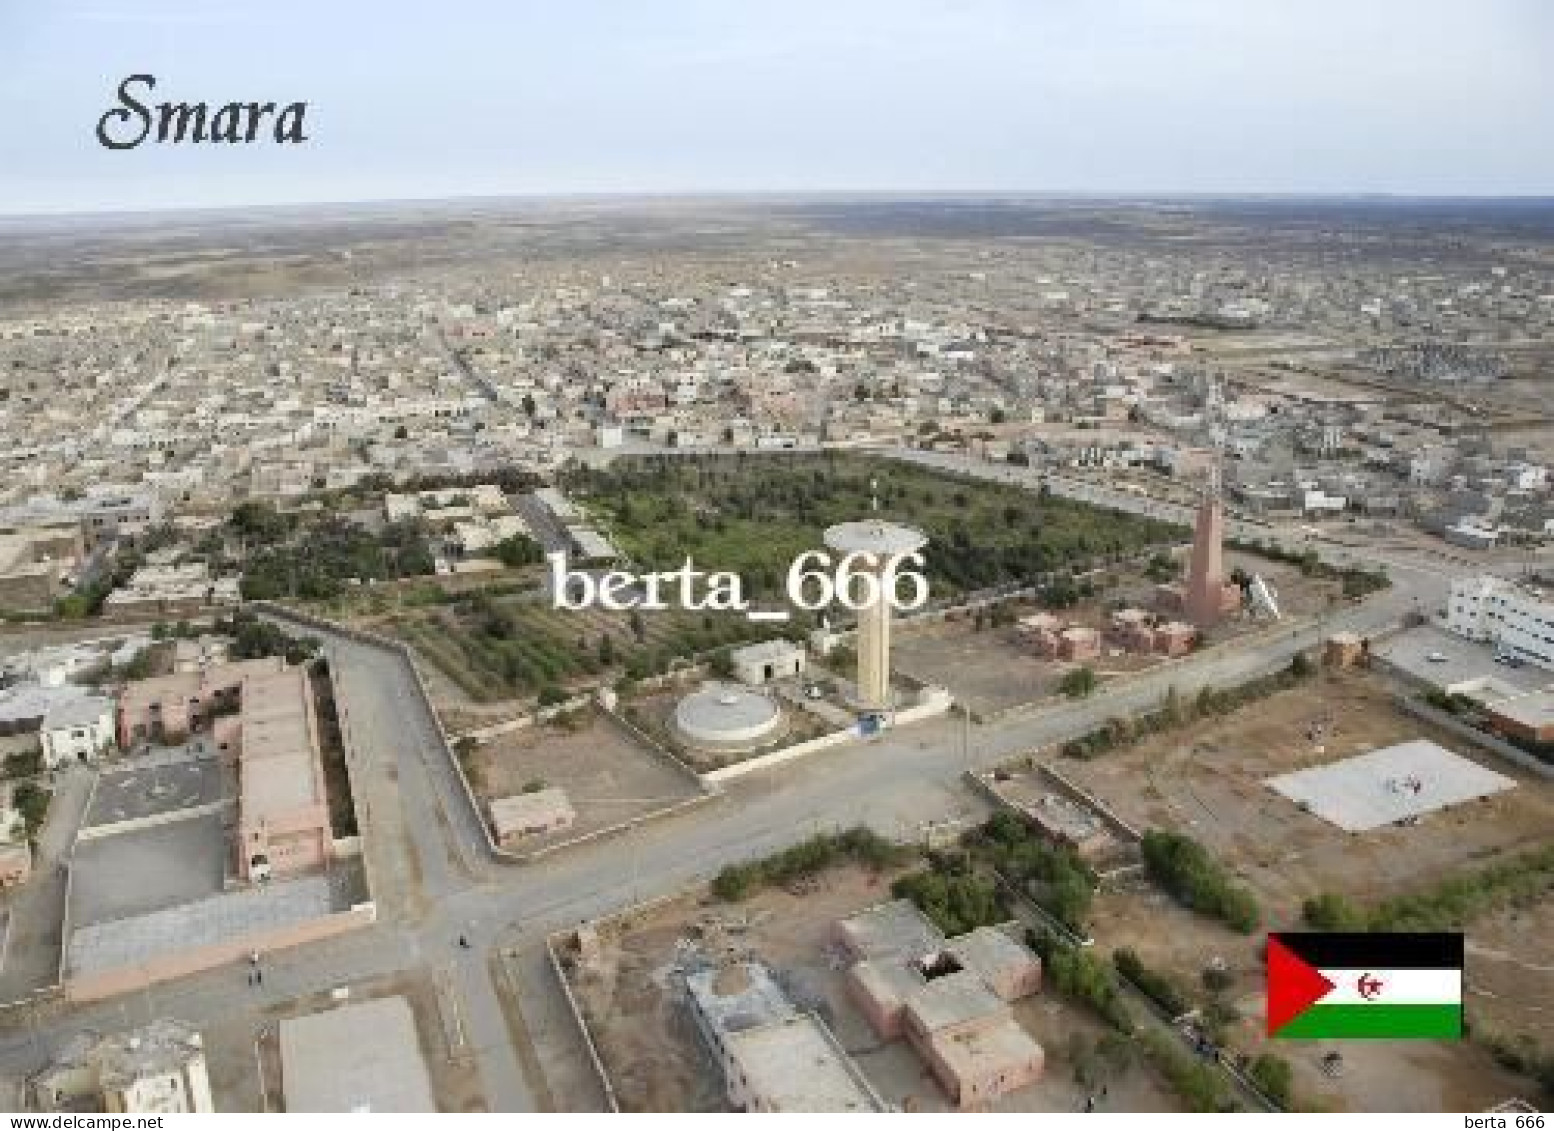 Western Sahara Smara Aerial View New Postcard - Western Sahara